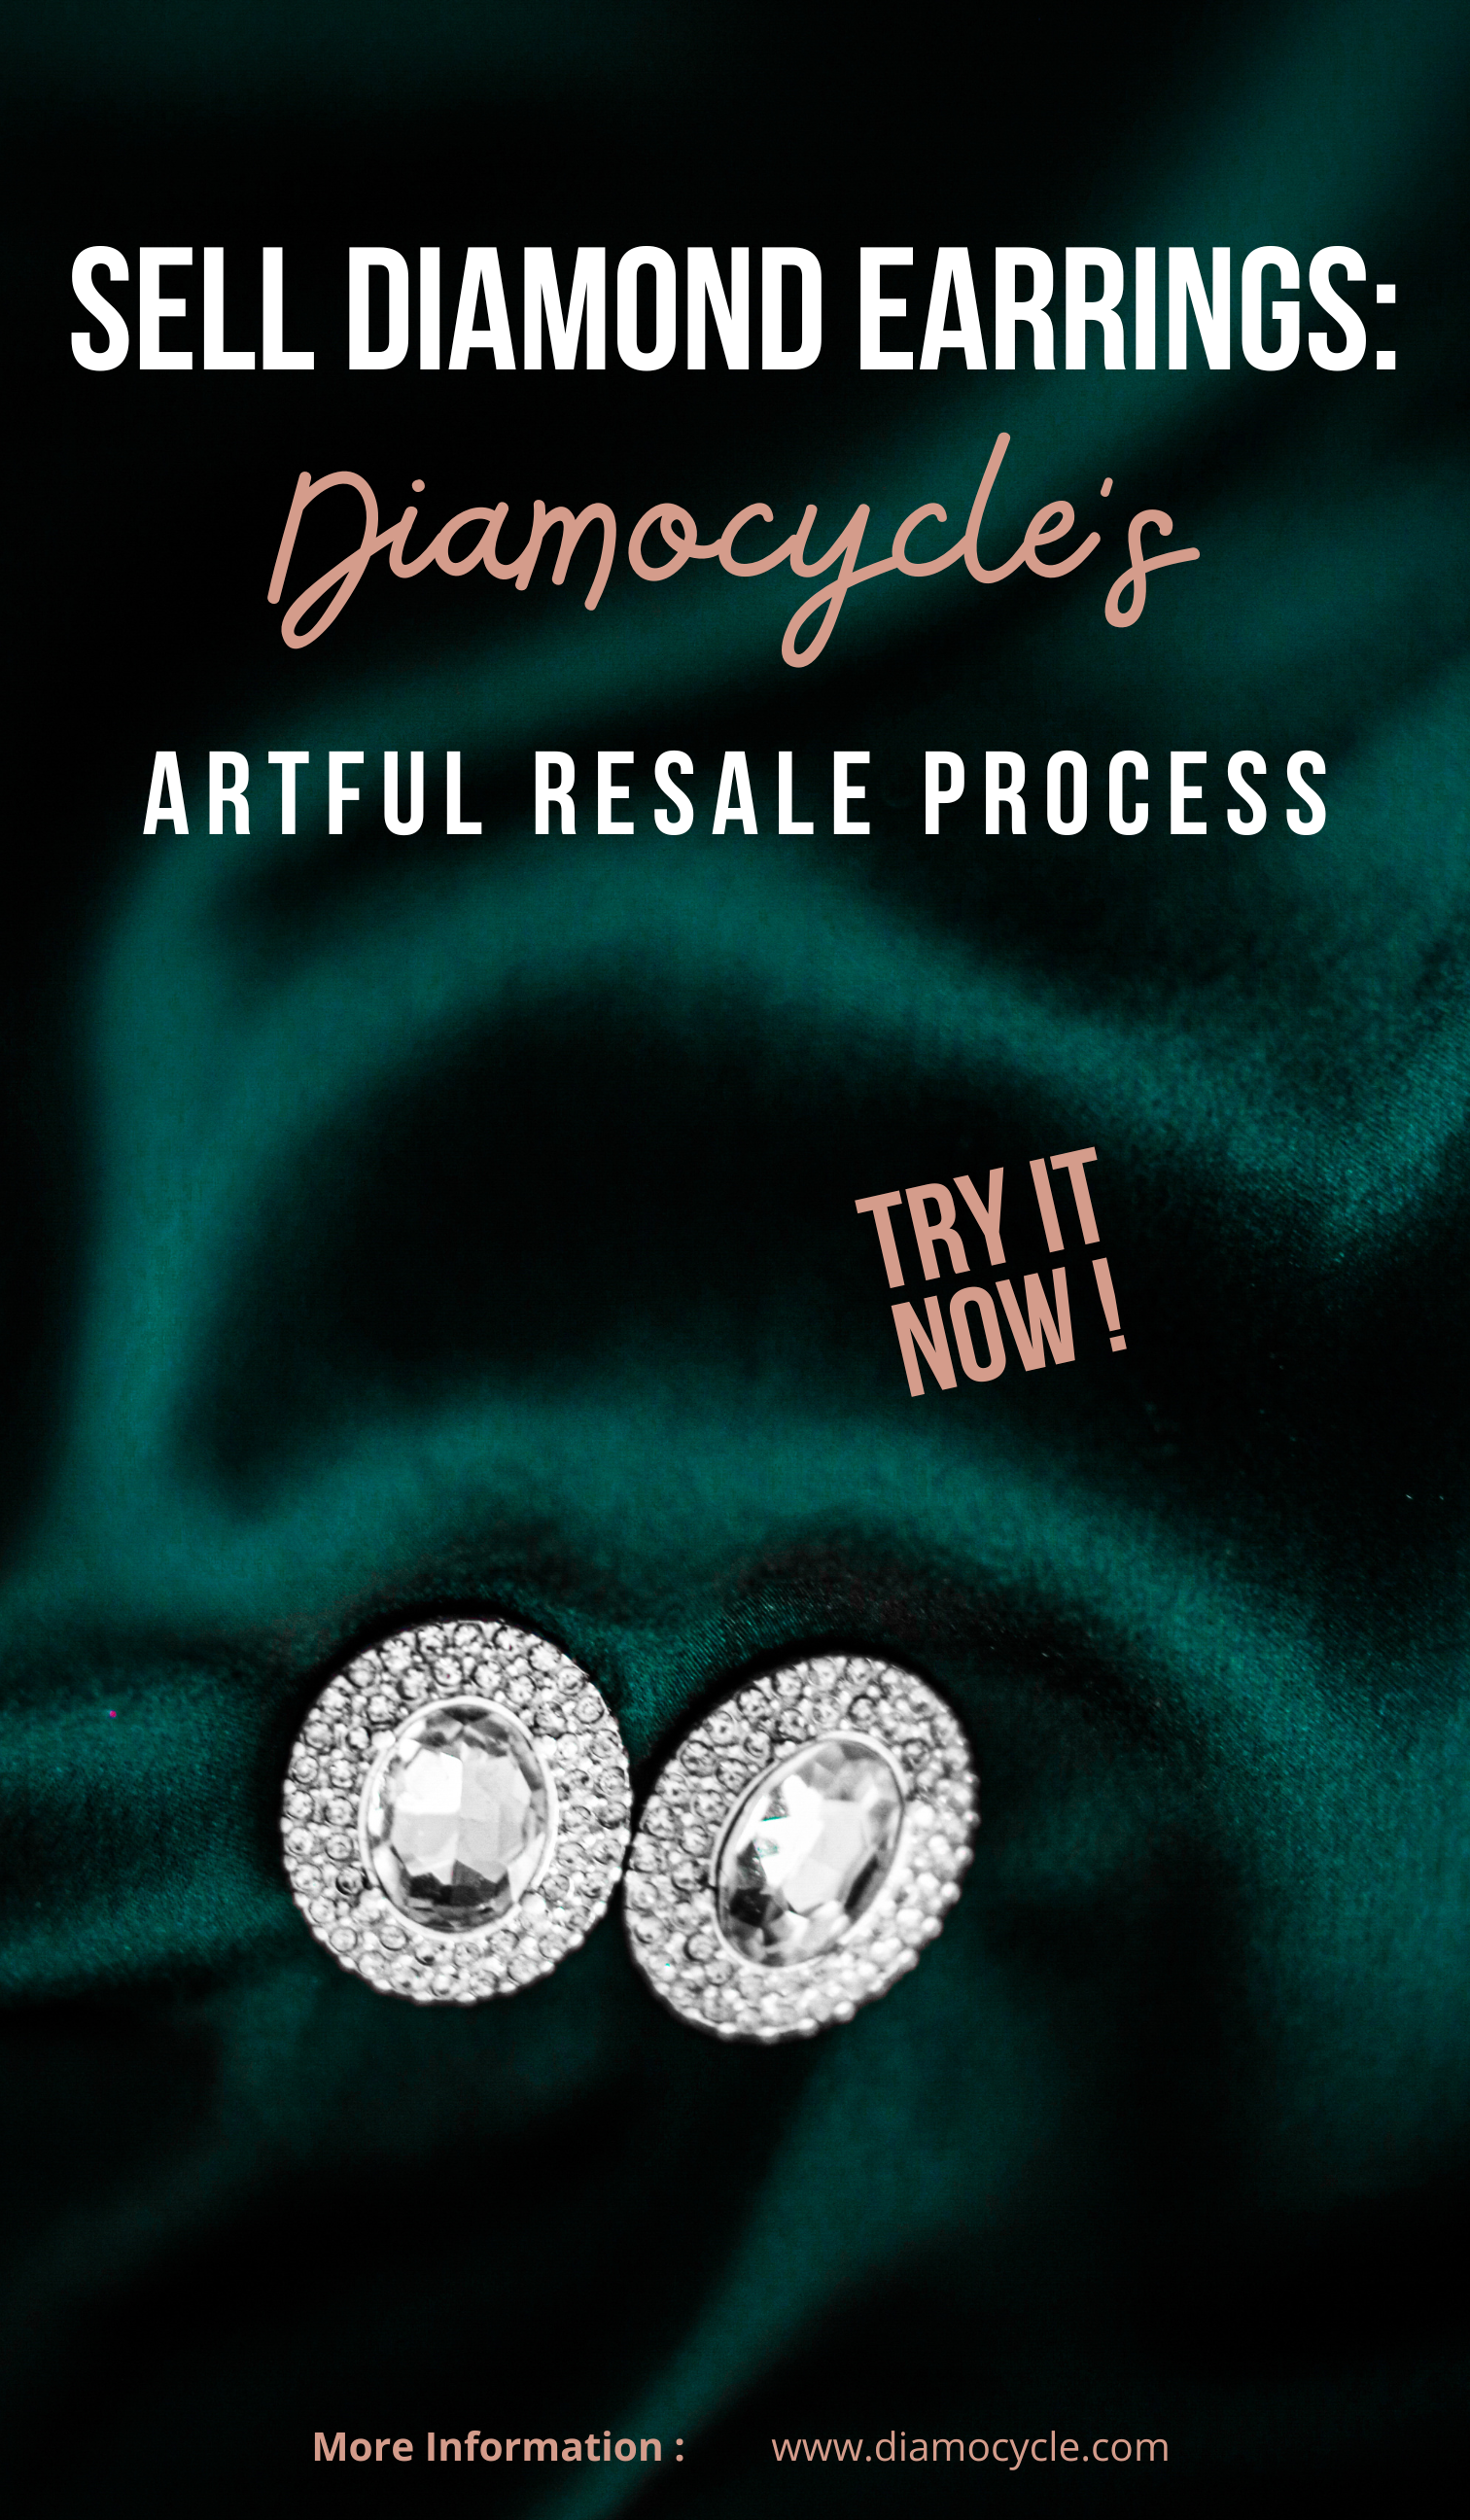 Sell Diamond Earrings: Diamocycle’s Artful Resale Process